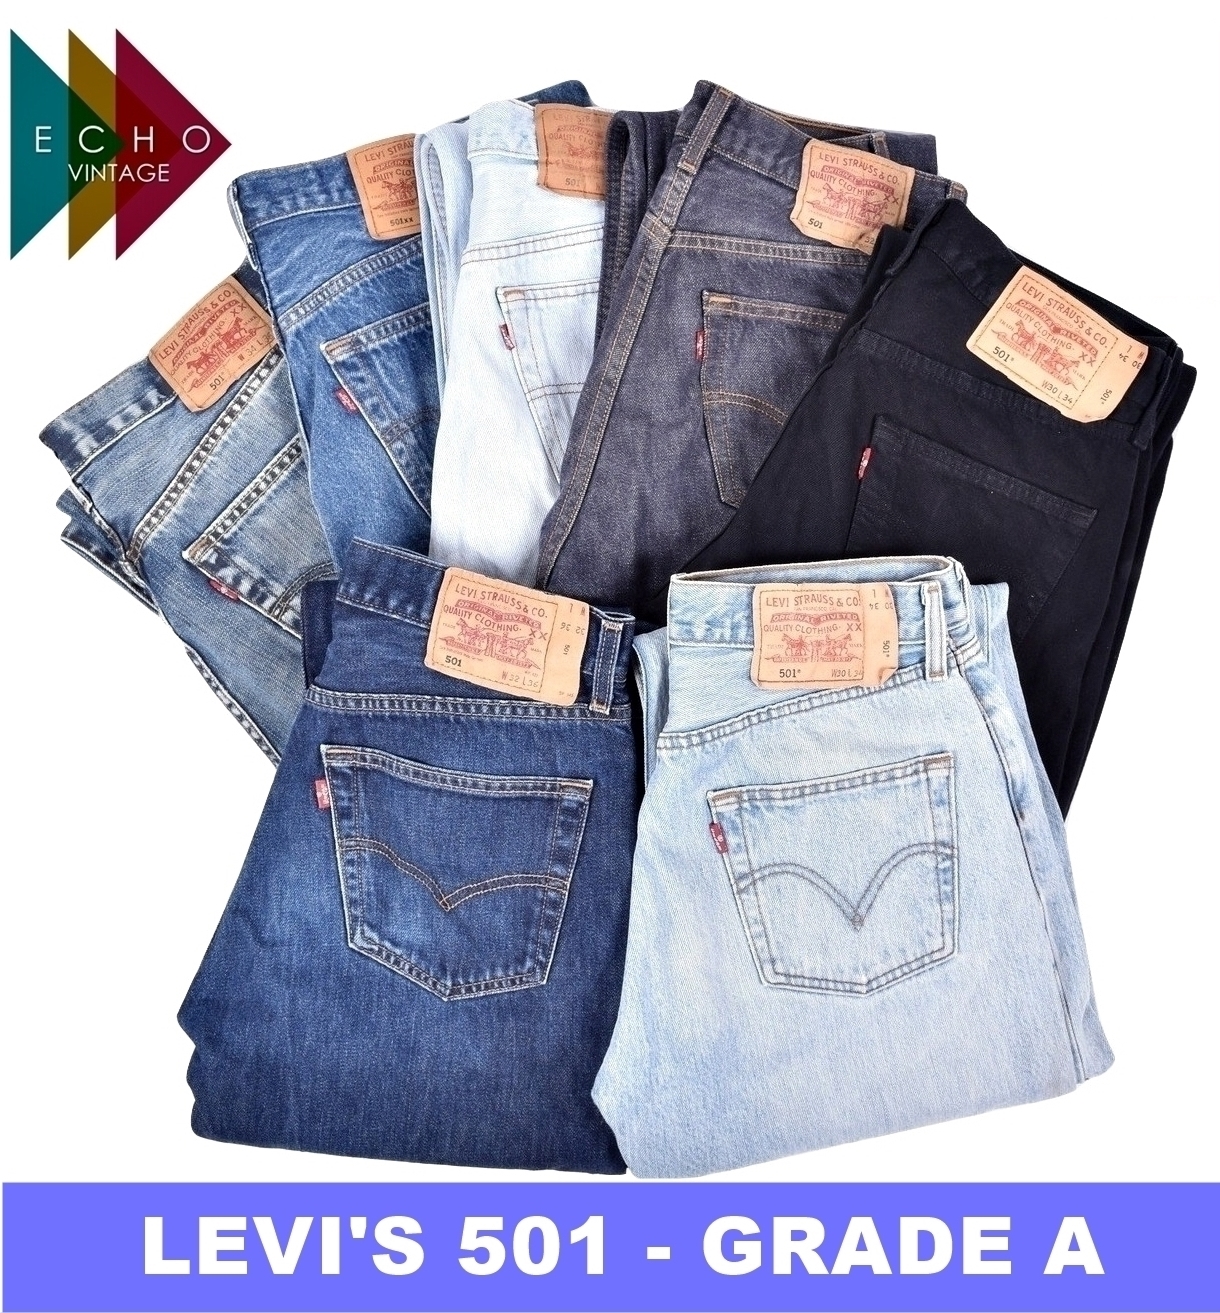 levi strauss jeans 501